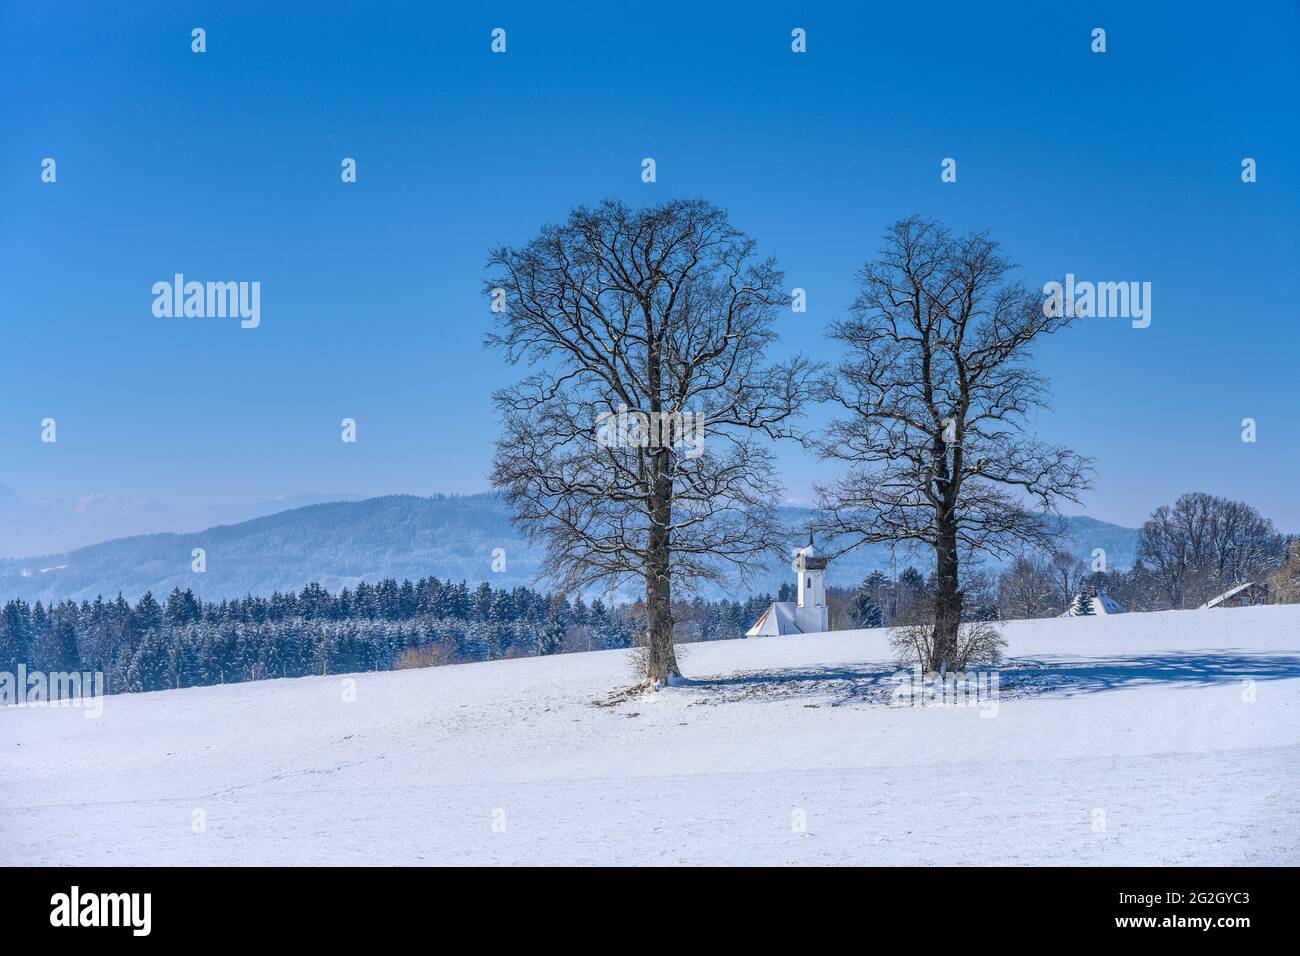 Germany, Bavaria, Upper Bavaria, Pfaffenwinkel, Penzberg, district Sankt Johannisrain, winter landscape with church Sankt Johannisrain Stock Photo